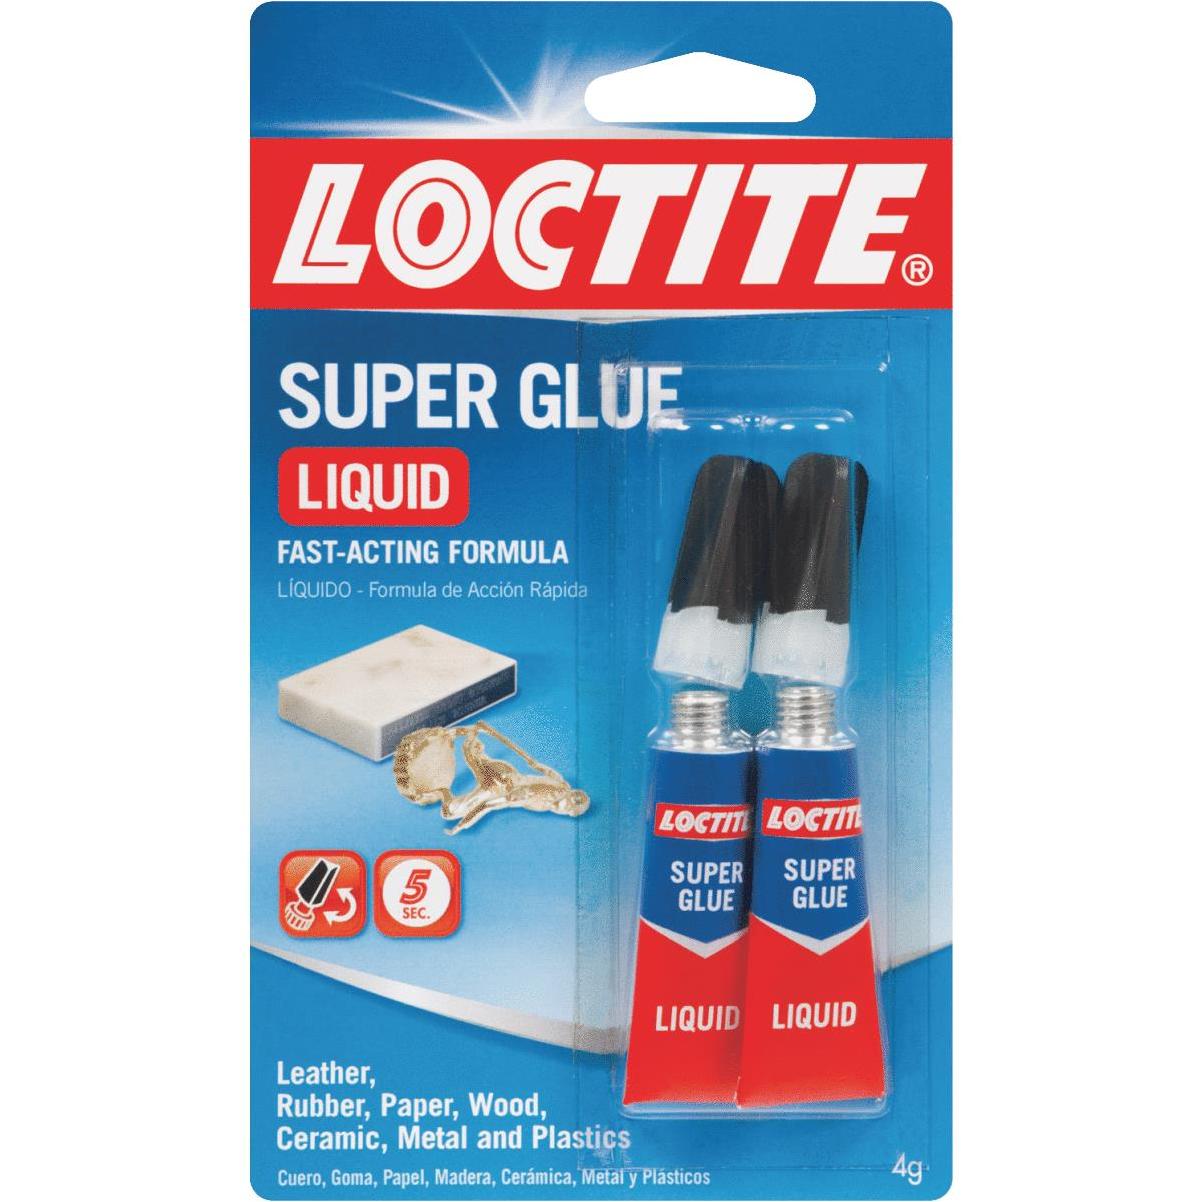 Gorilla Glue Super Glue Gel, Two 0.11 oz Tubes, Dries Clear